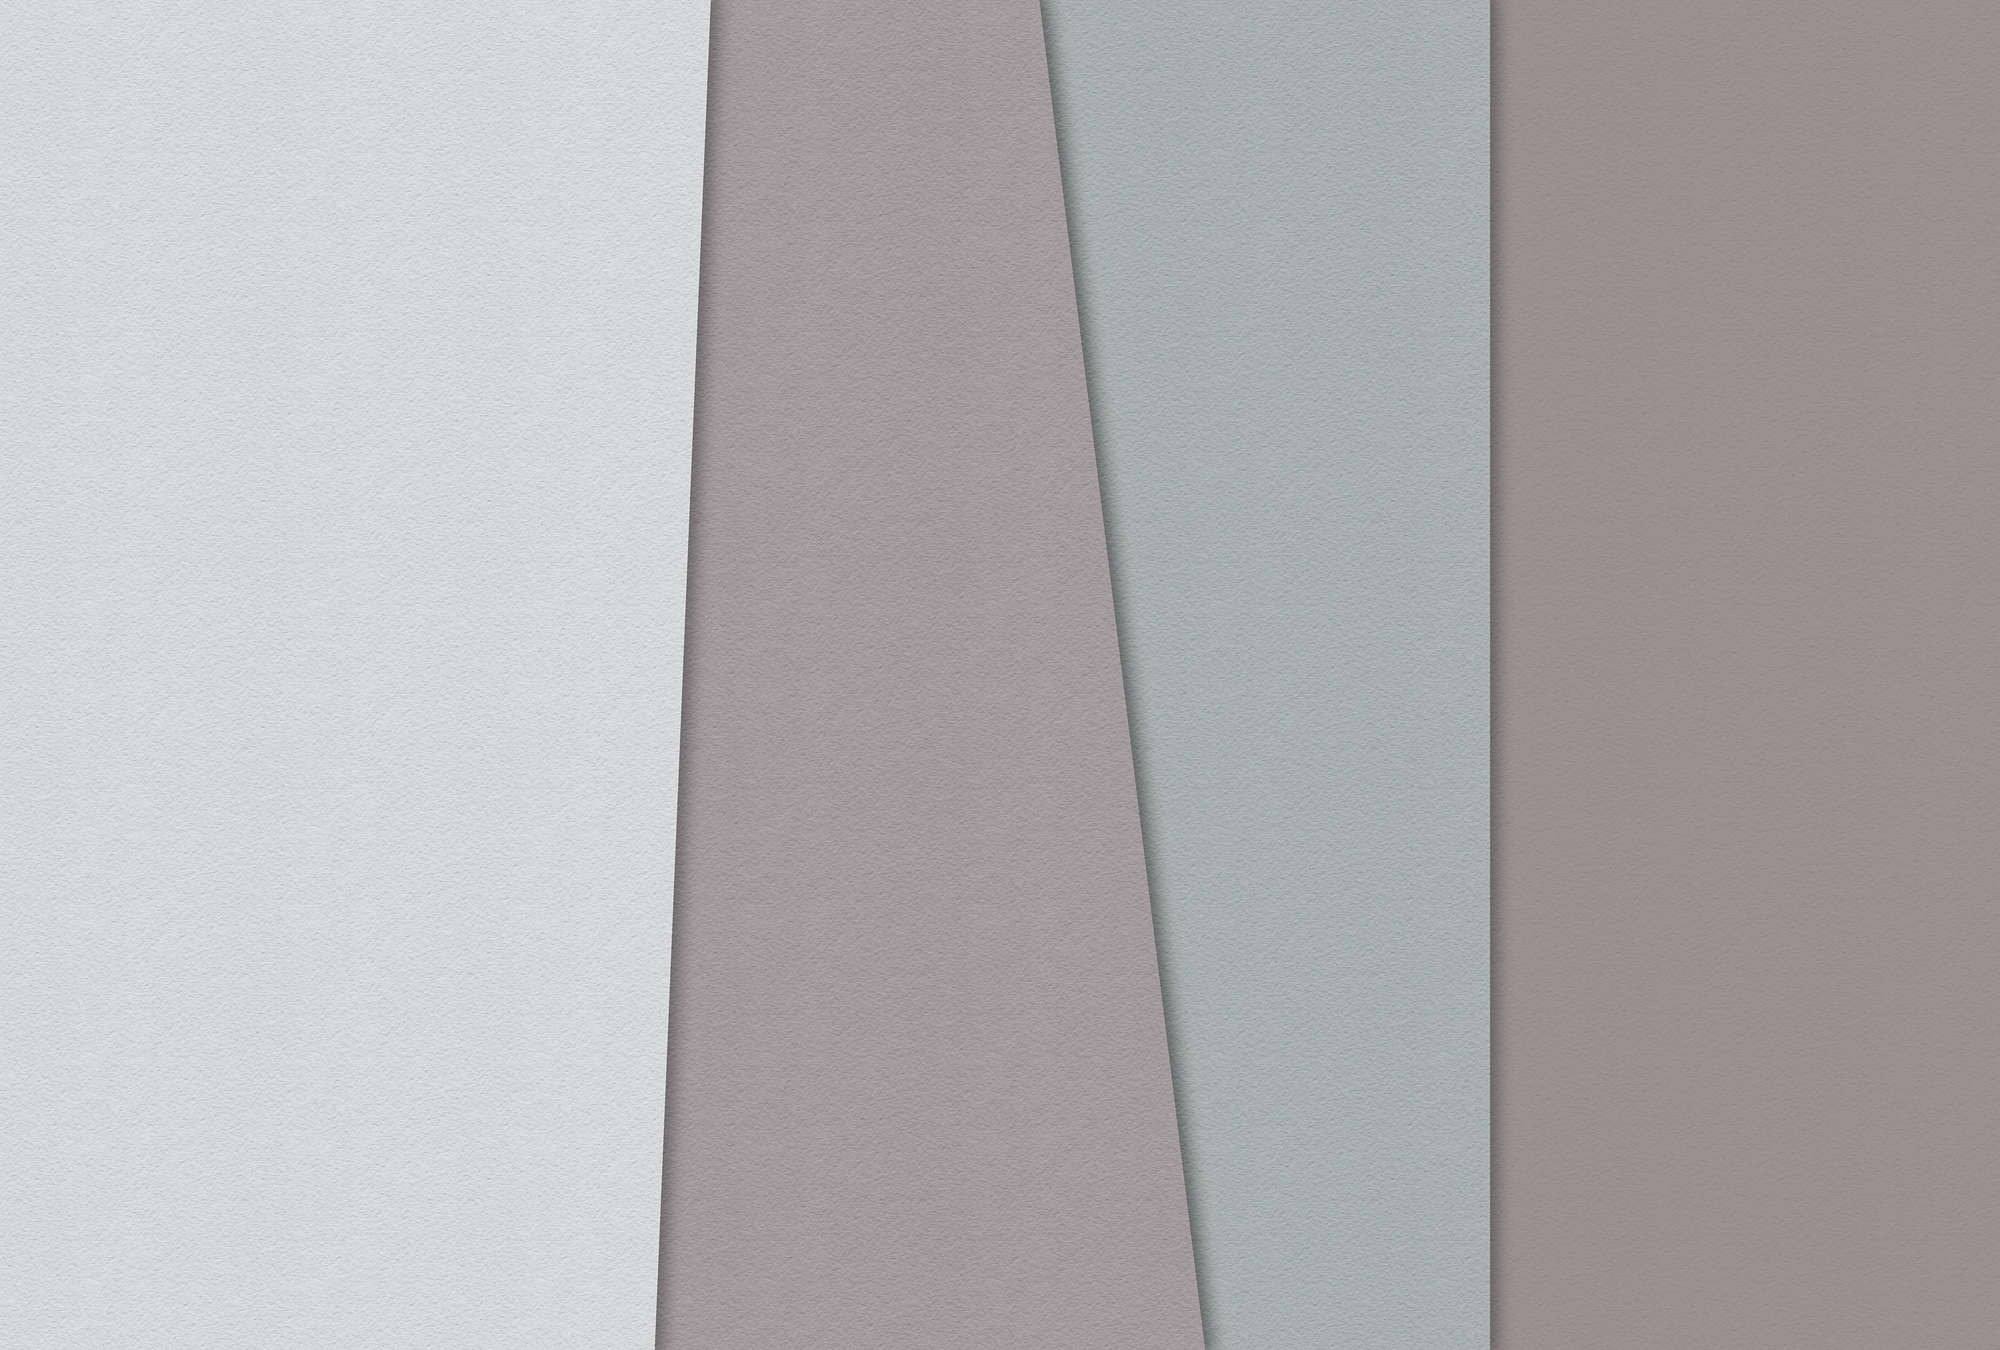             Layered paper 3 - Minimalistische Fototapete Farbfelder-Büttenpapier Struktur – Blau, Creme | Mattes Glattvlies
        